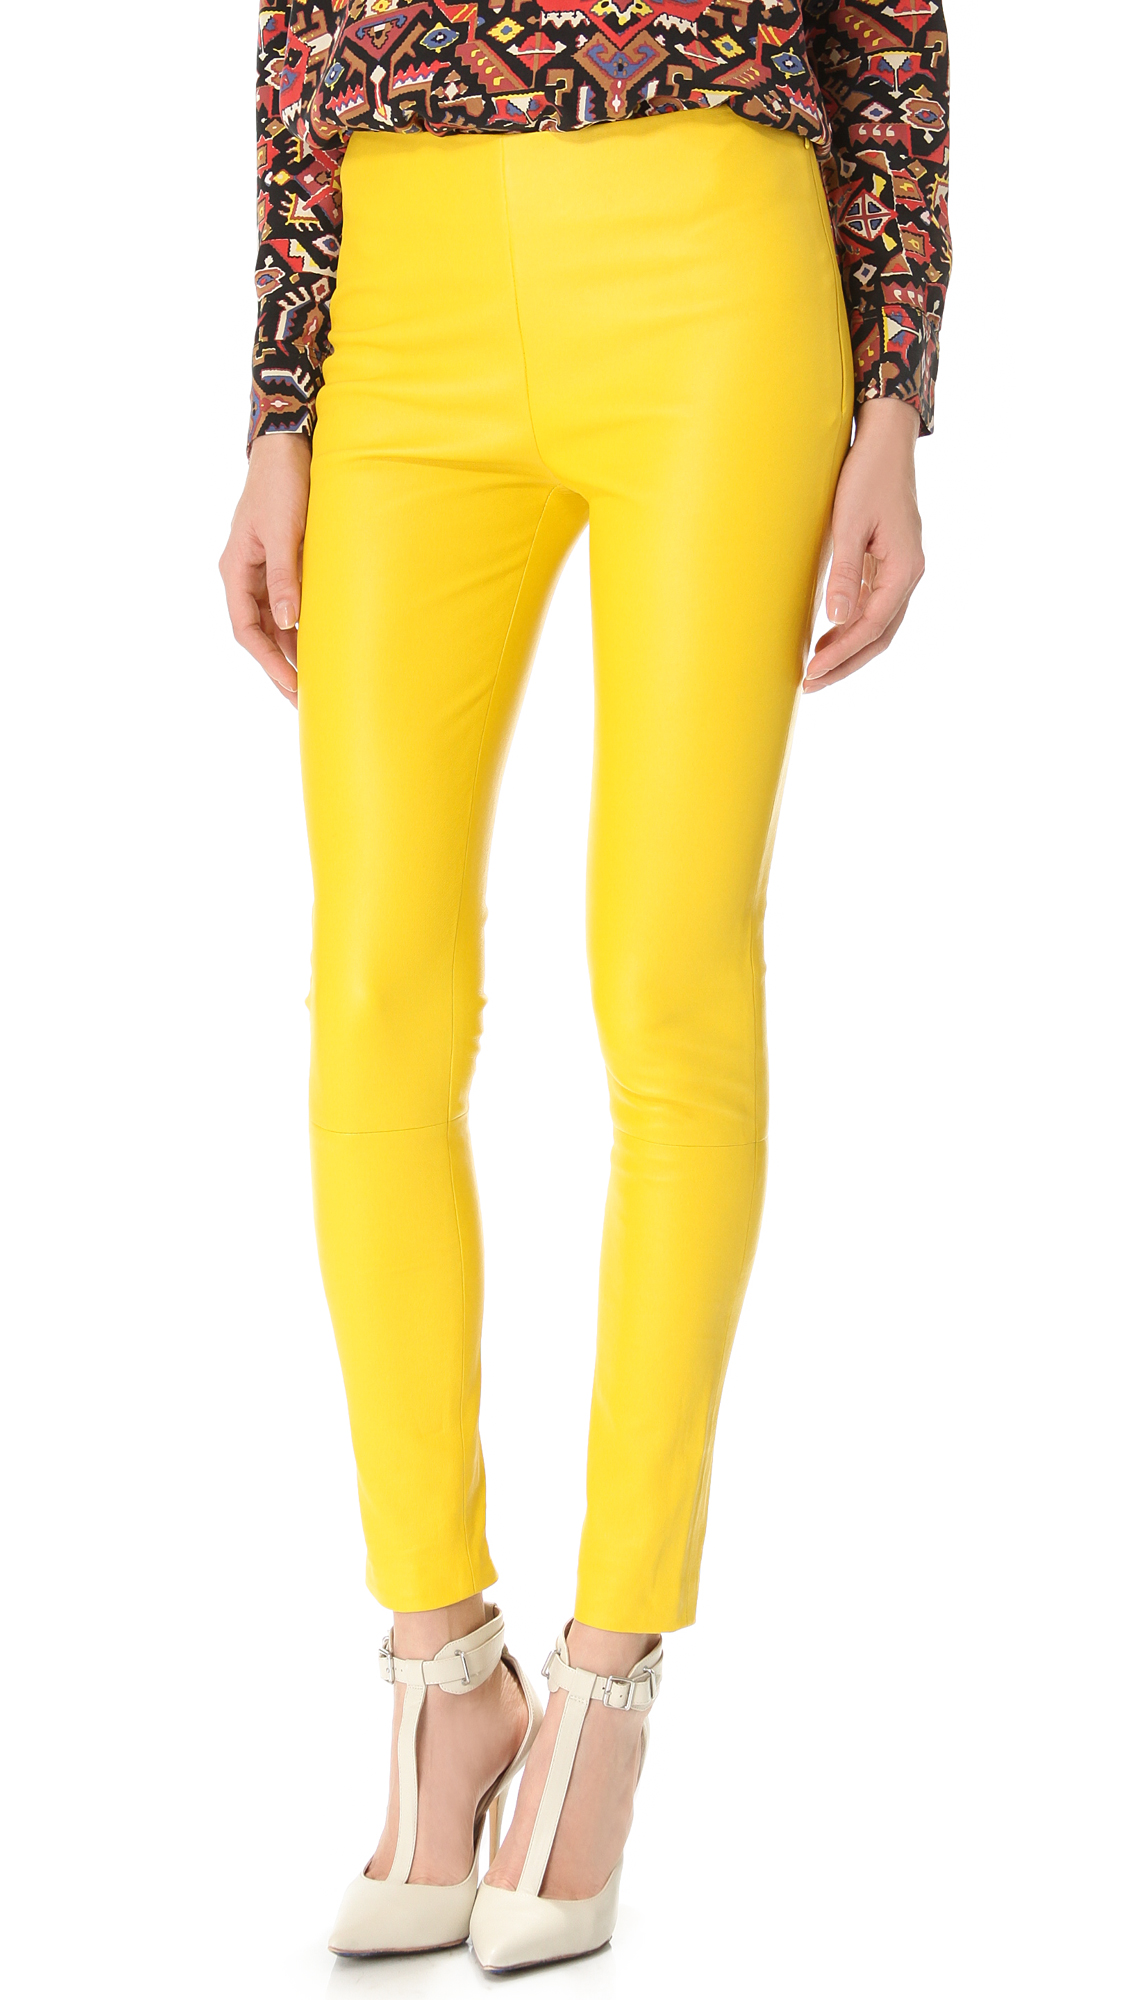 yellow leather leggings